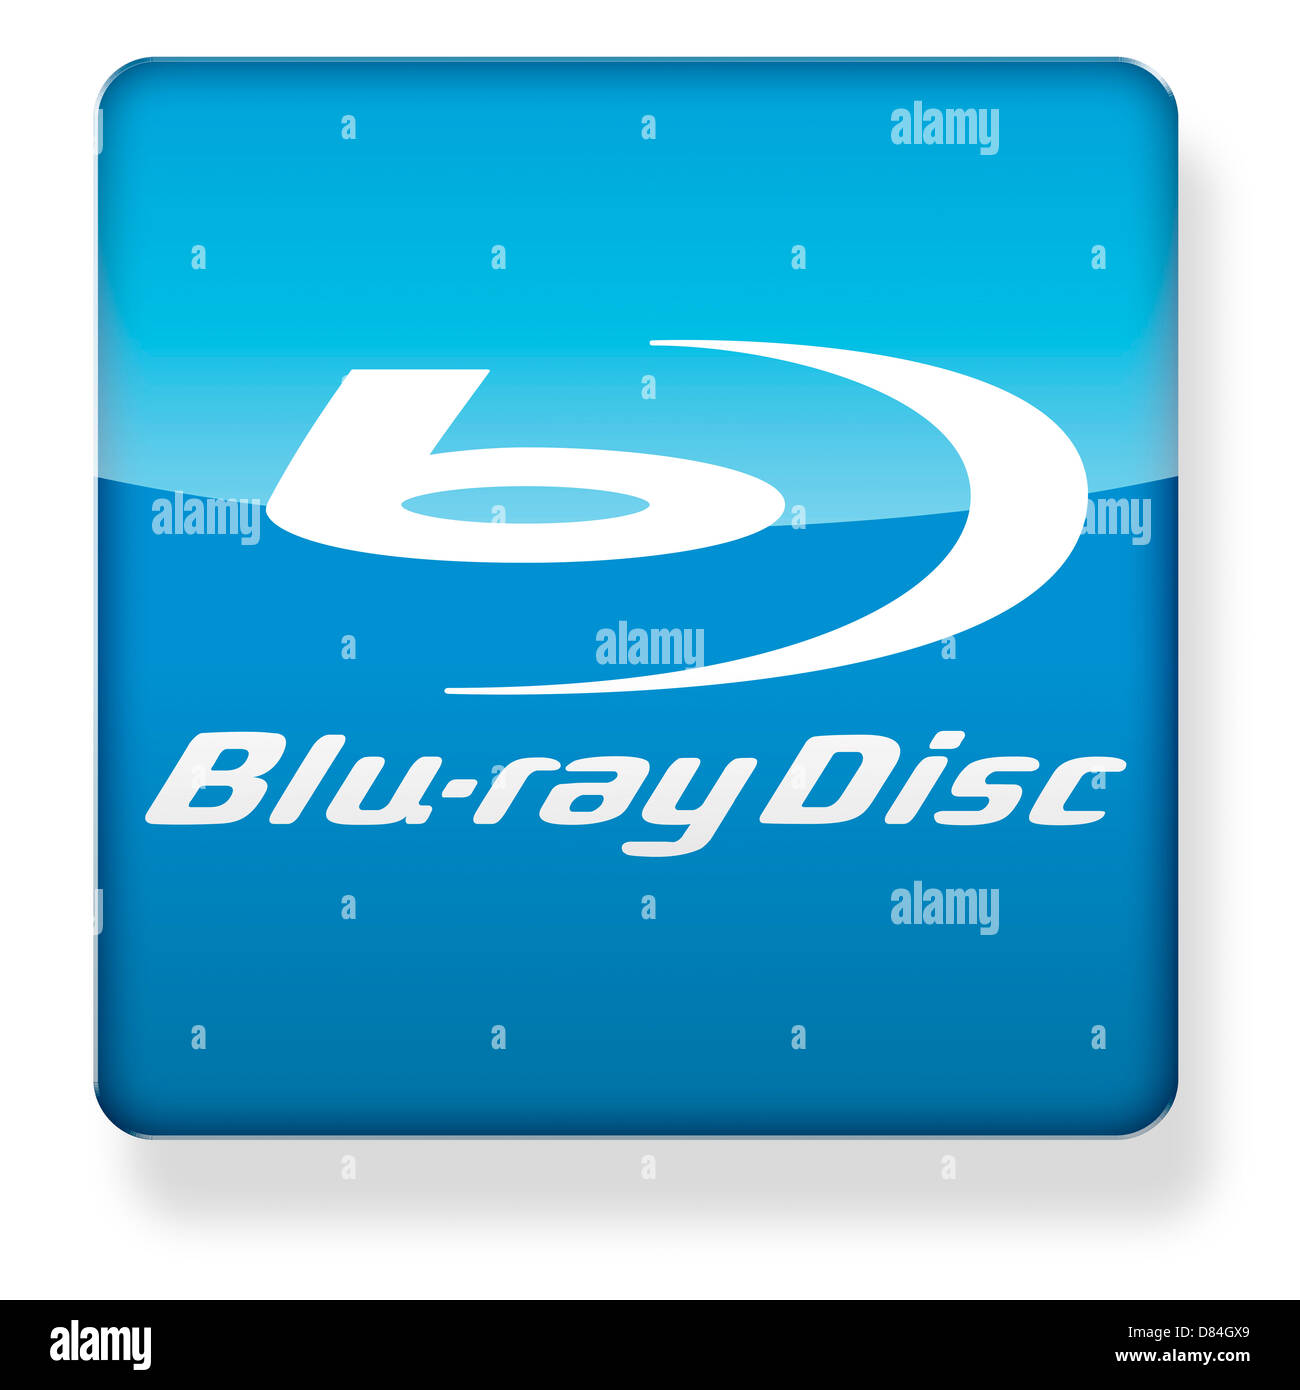 https://c8.alamy.com/comp/D84GX9/blu-ray-disc-logo-as-an-app-icon-clipping-path-included-D84GX9.jpg